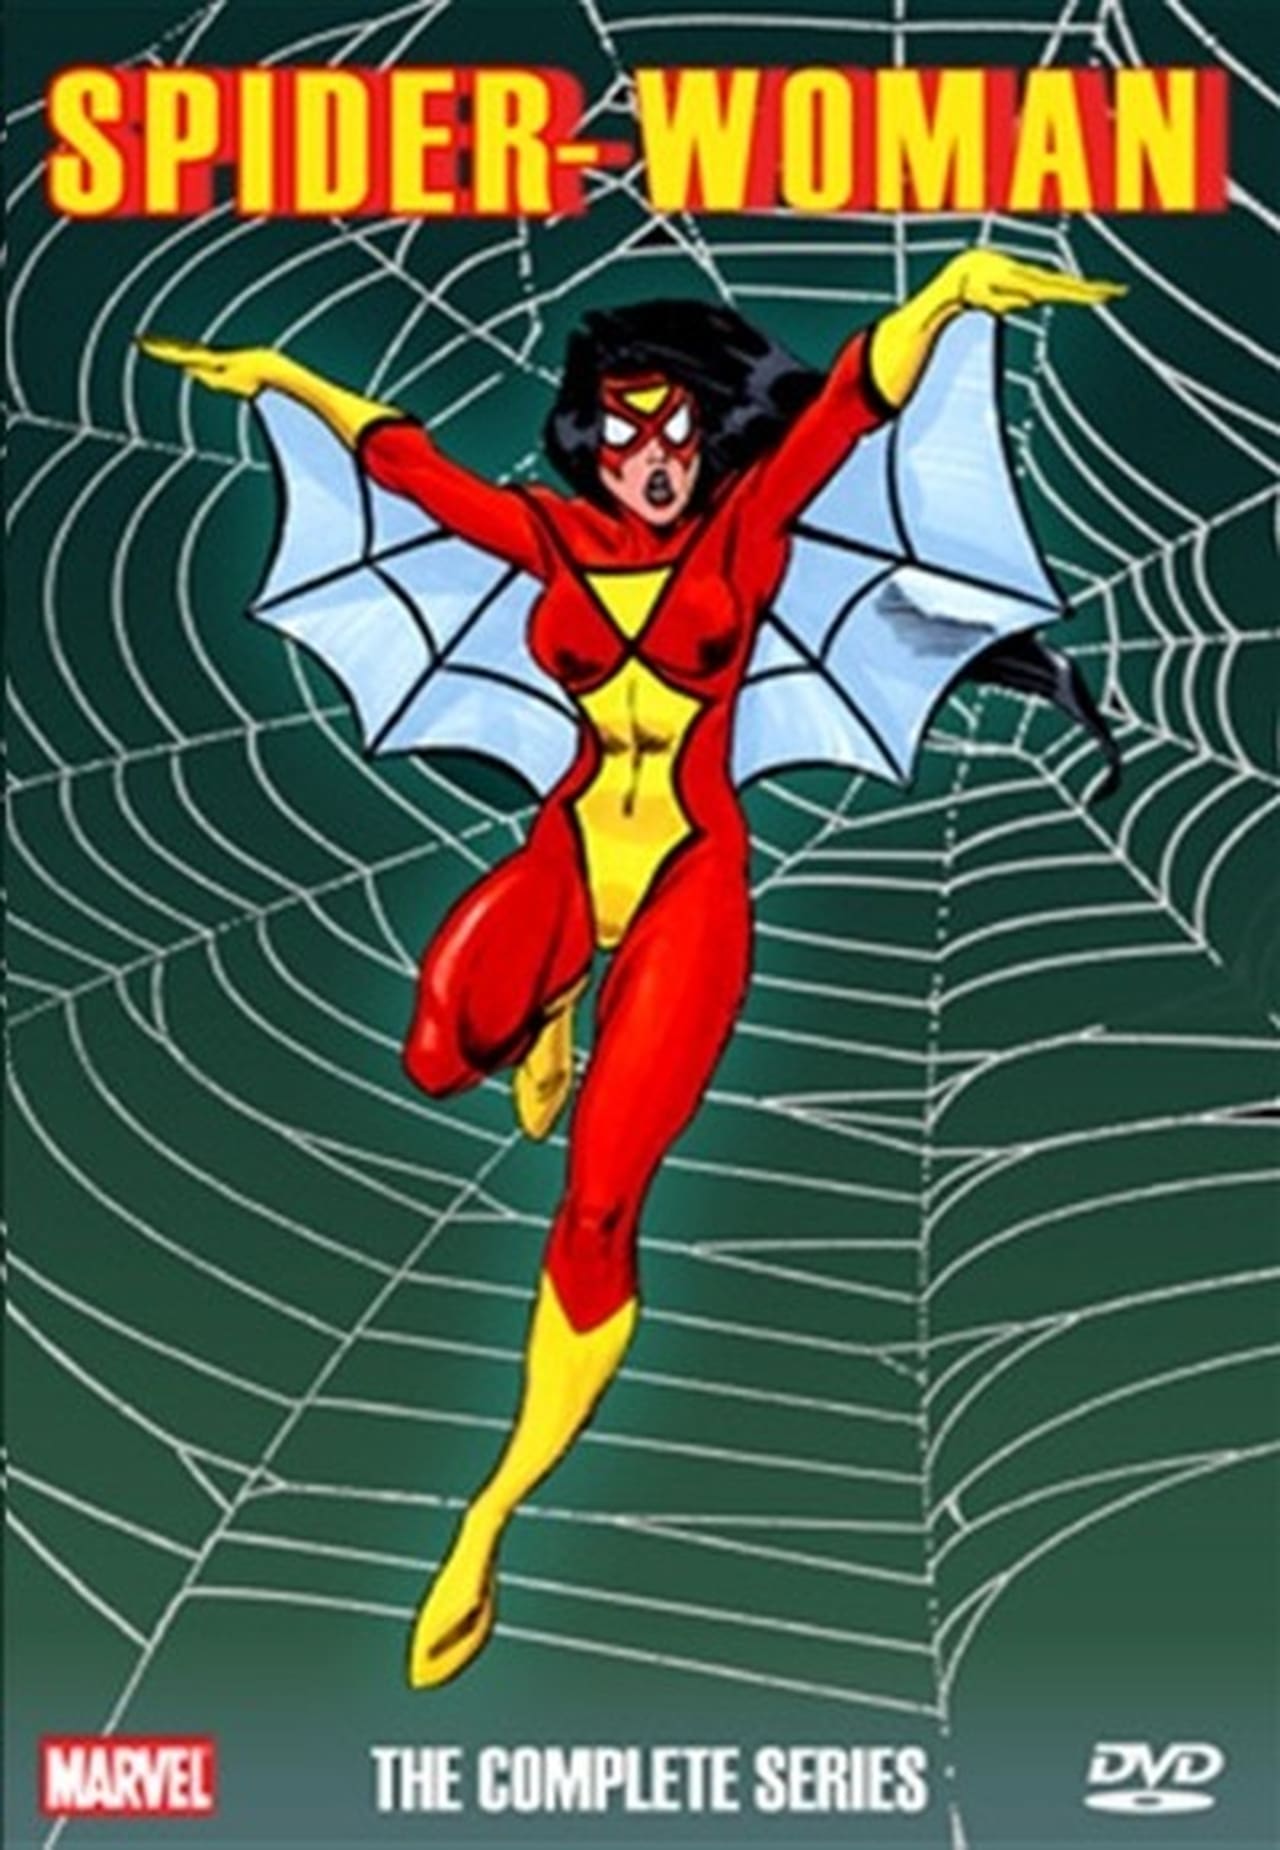 Spider-Woman Season 1